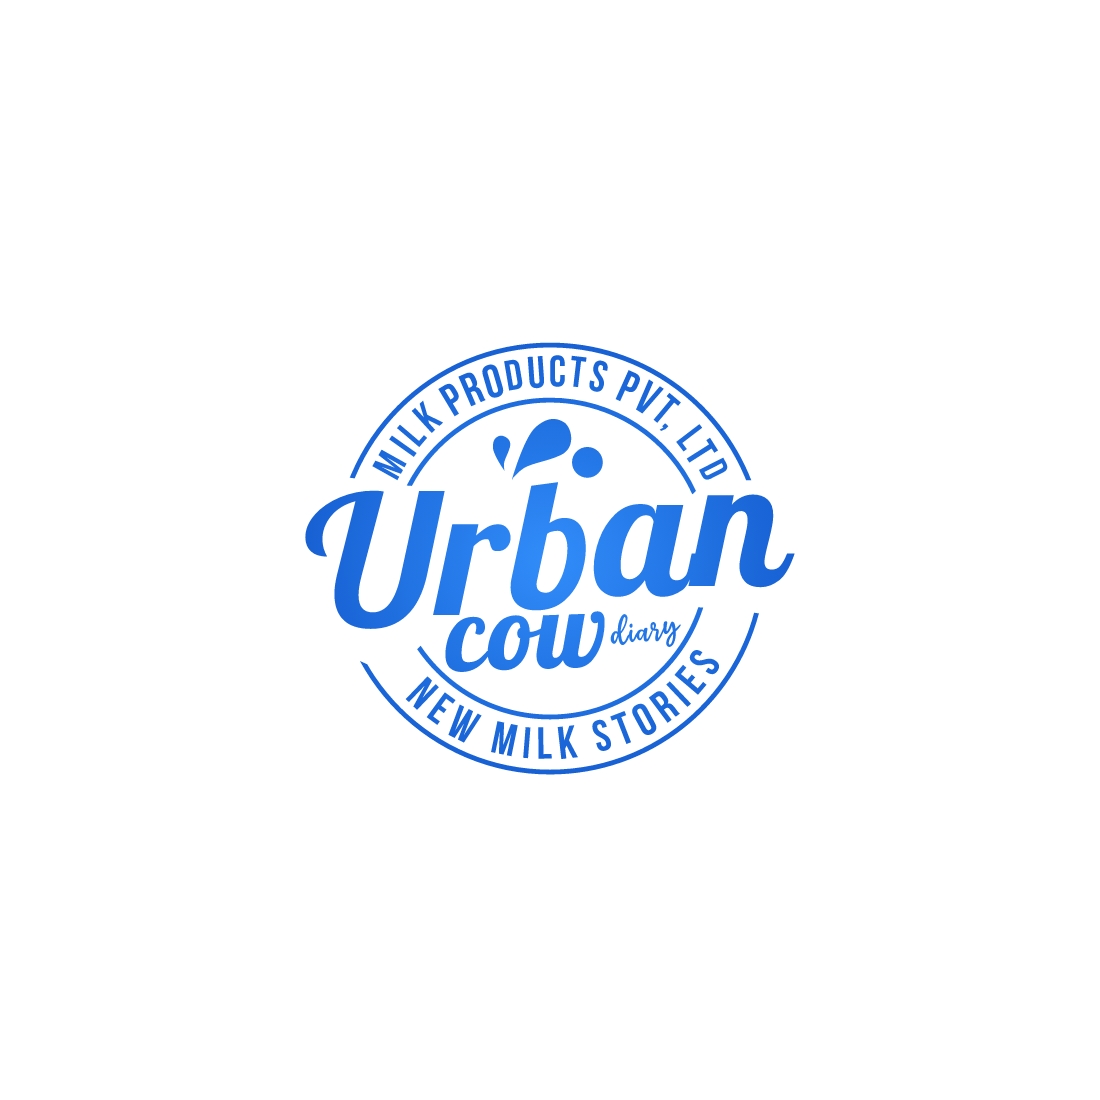 Urban Cow – Dairy Farm Logo Design cover image.